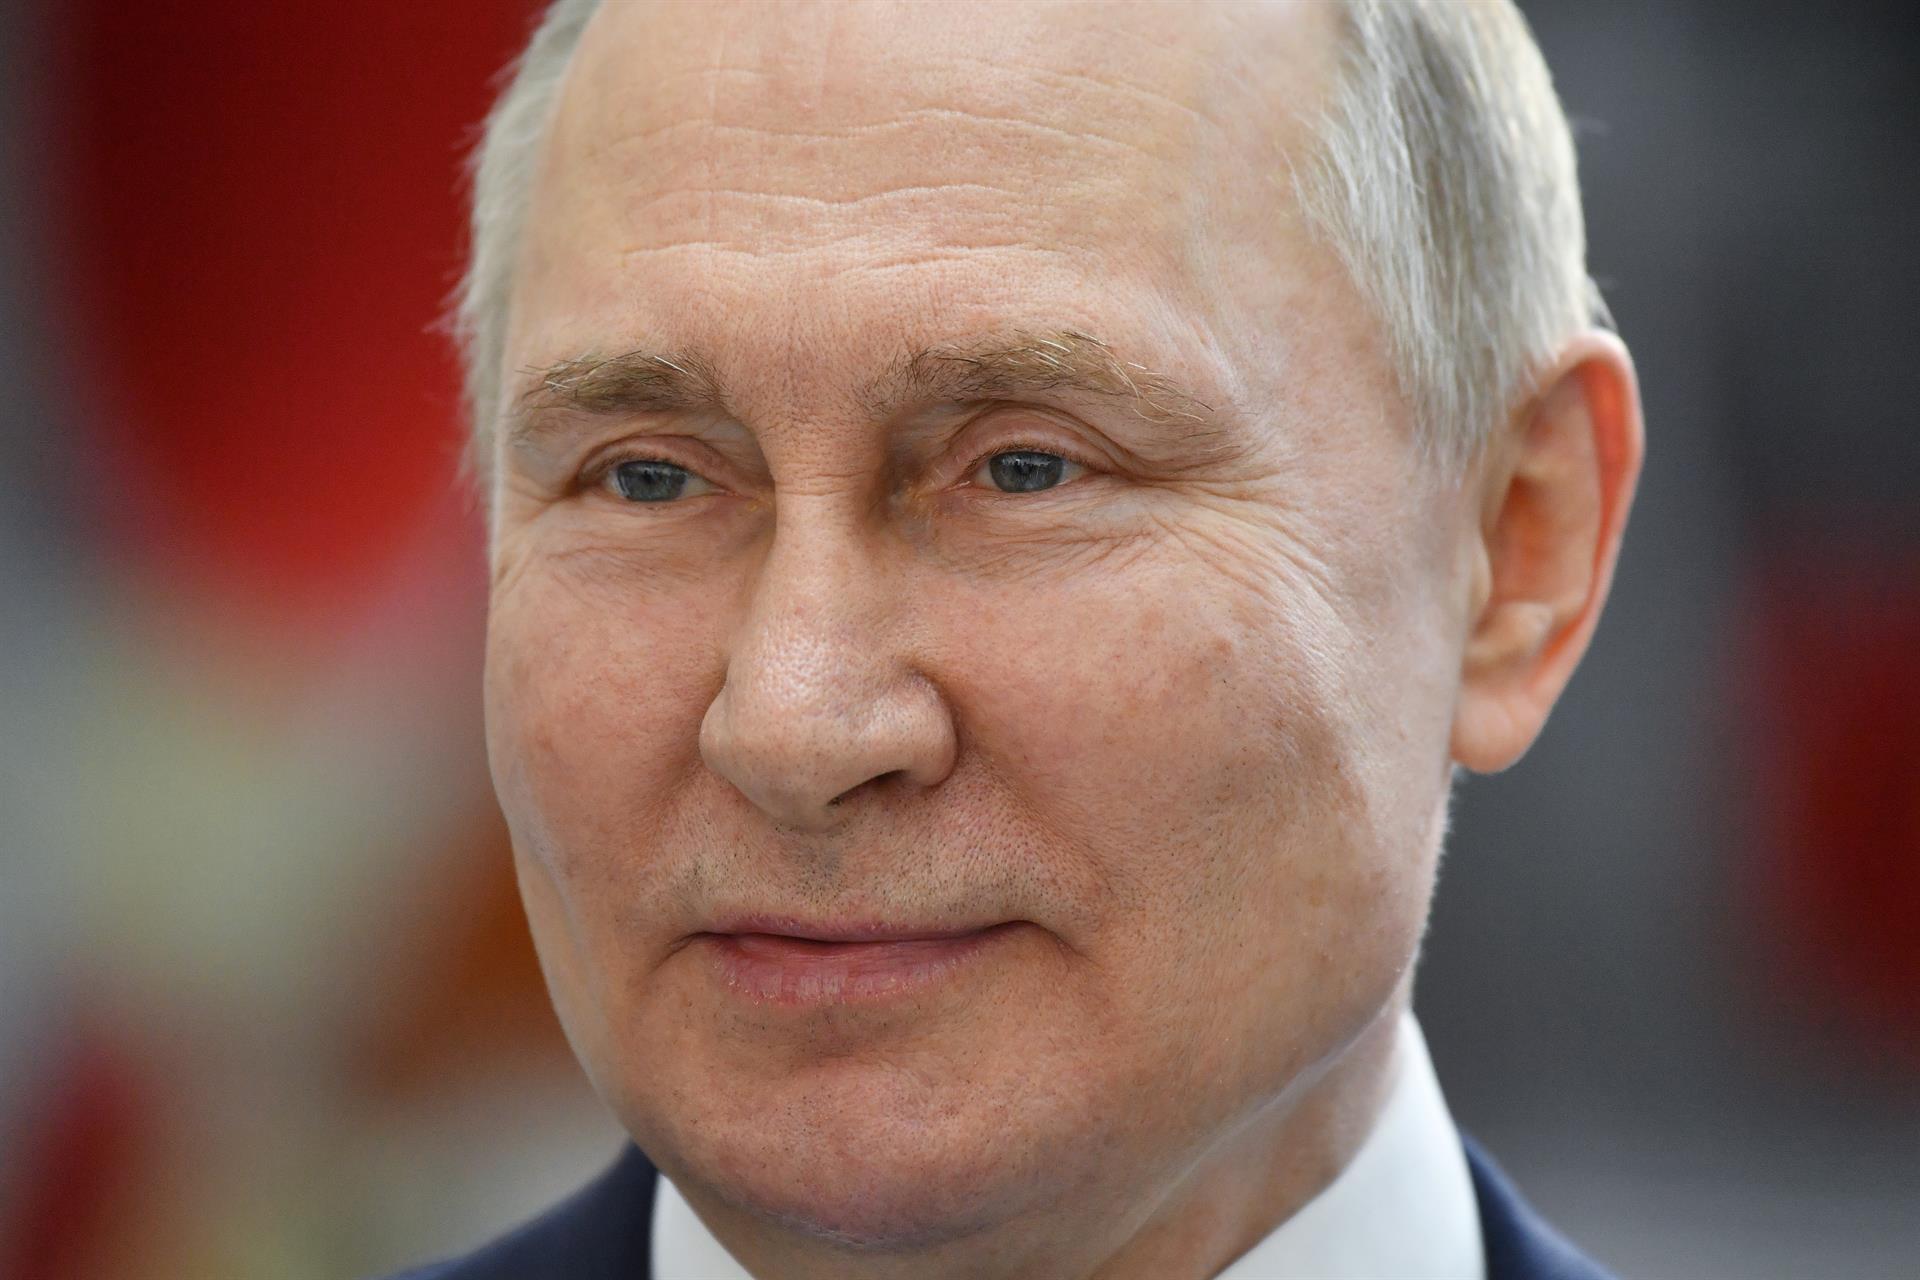 Presidente de Rusia, Vladimir Putin. Foto: EFE/EPA/EVGENY BIYATOV / KREMLIN POOL